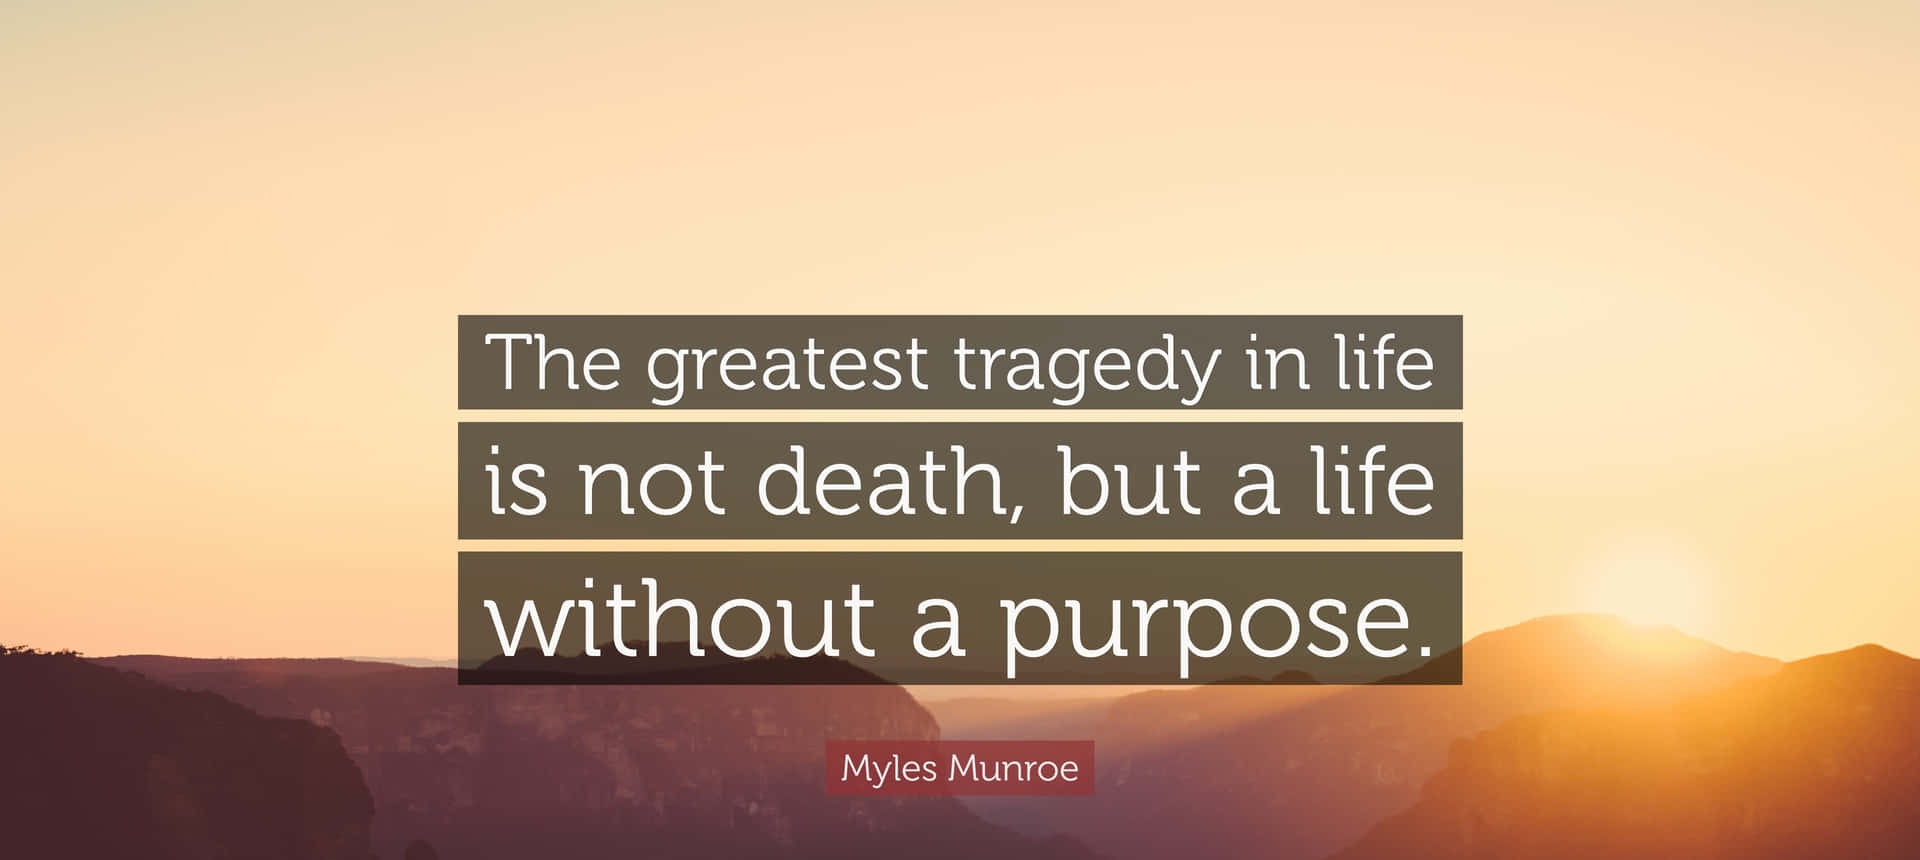 Life Purpose Tragedy Quote Myles Munroe Wallpaper